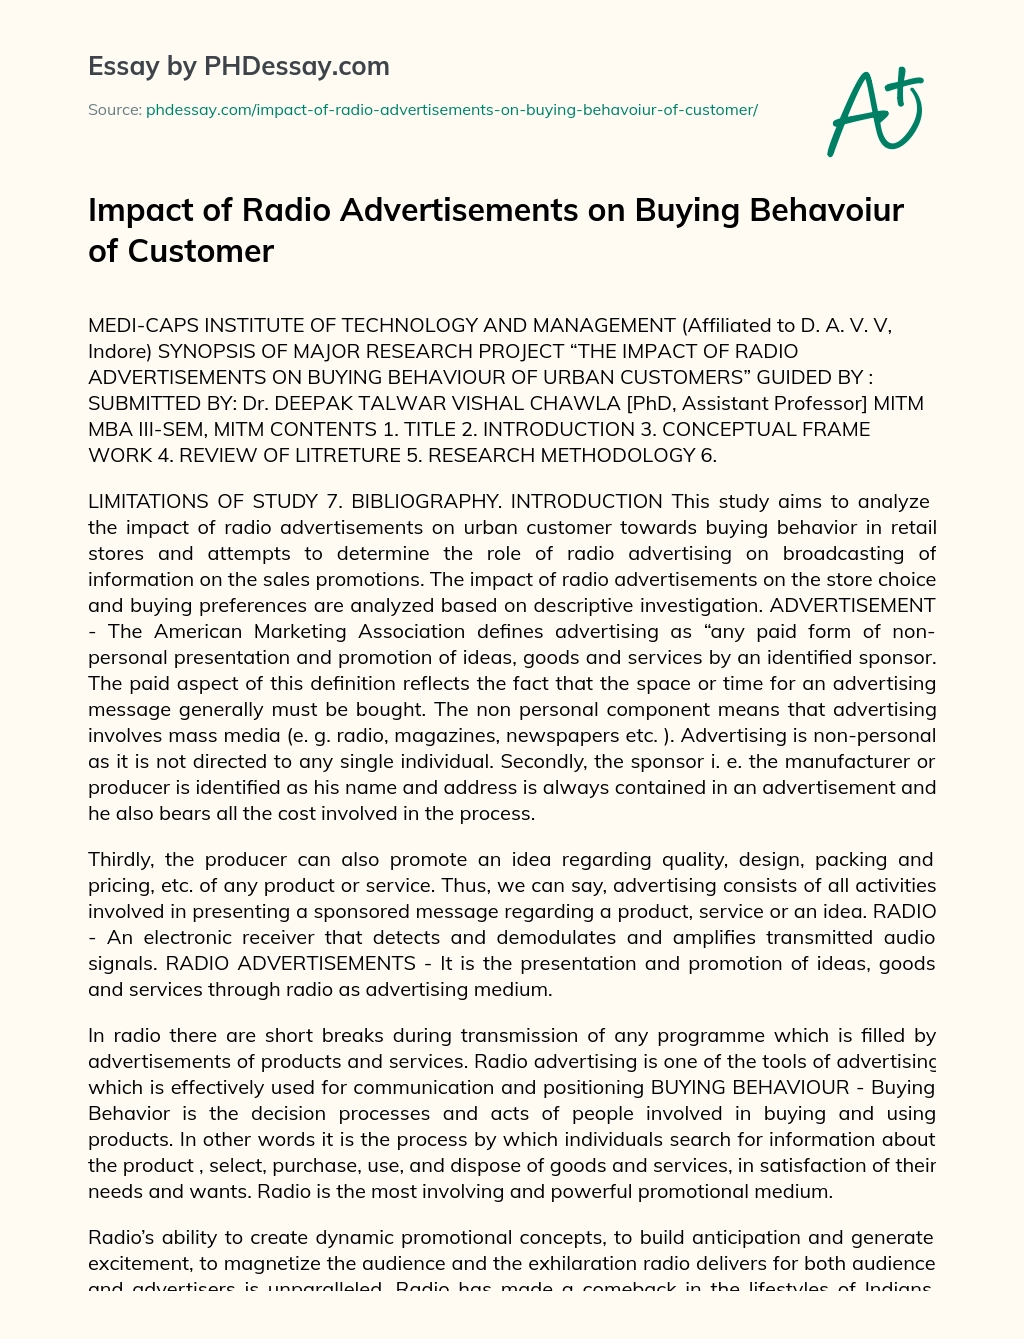 Impact of Radio Advertisements on Buying Behavoiur of Customer essay